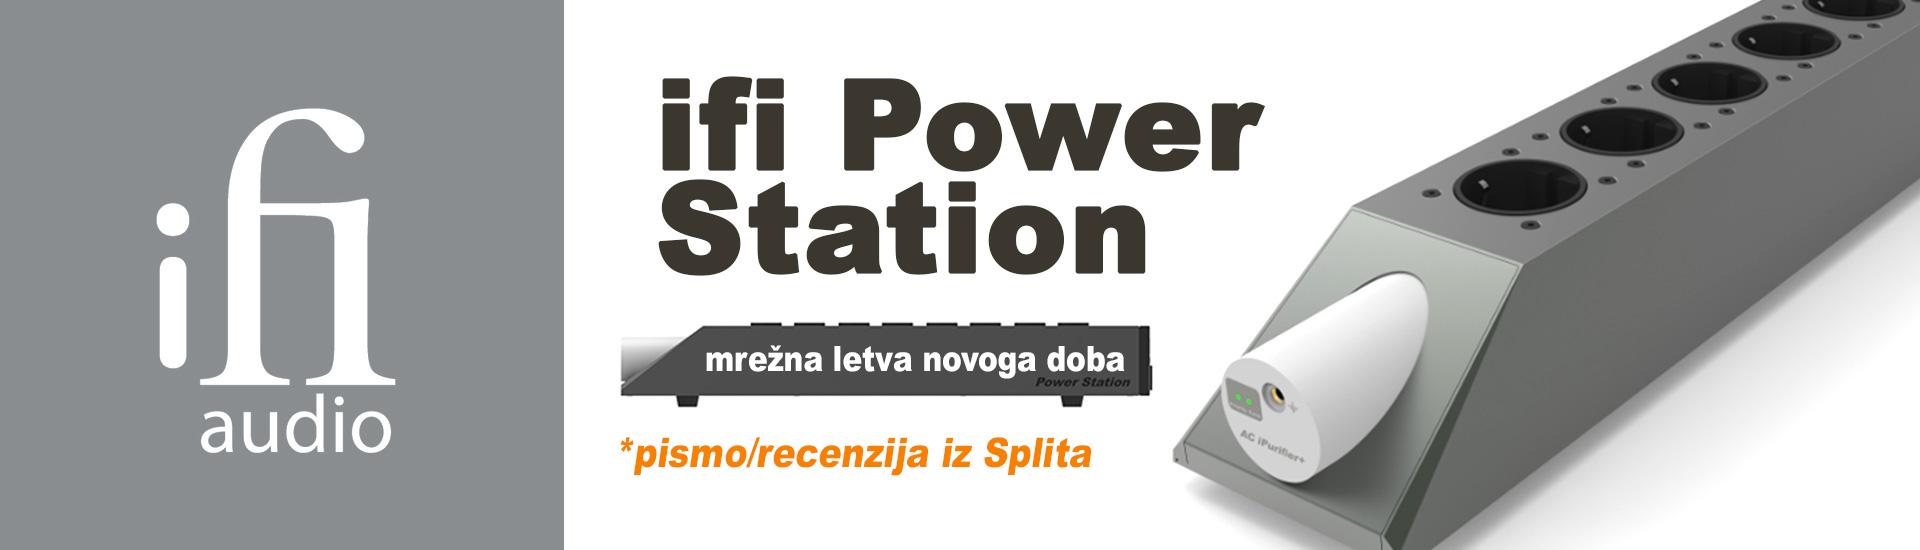 ifi Audio Power Station recenzija iz Splita